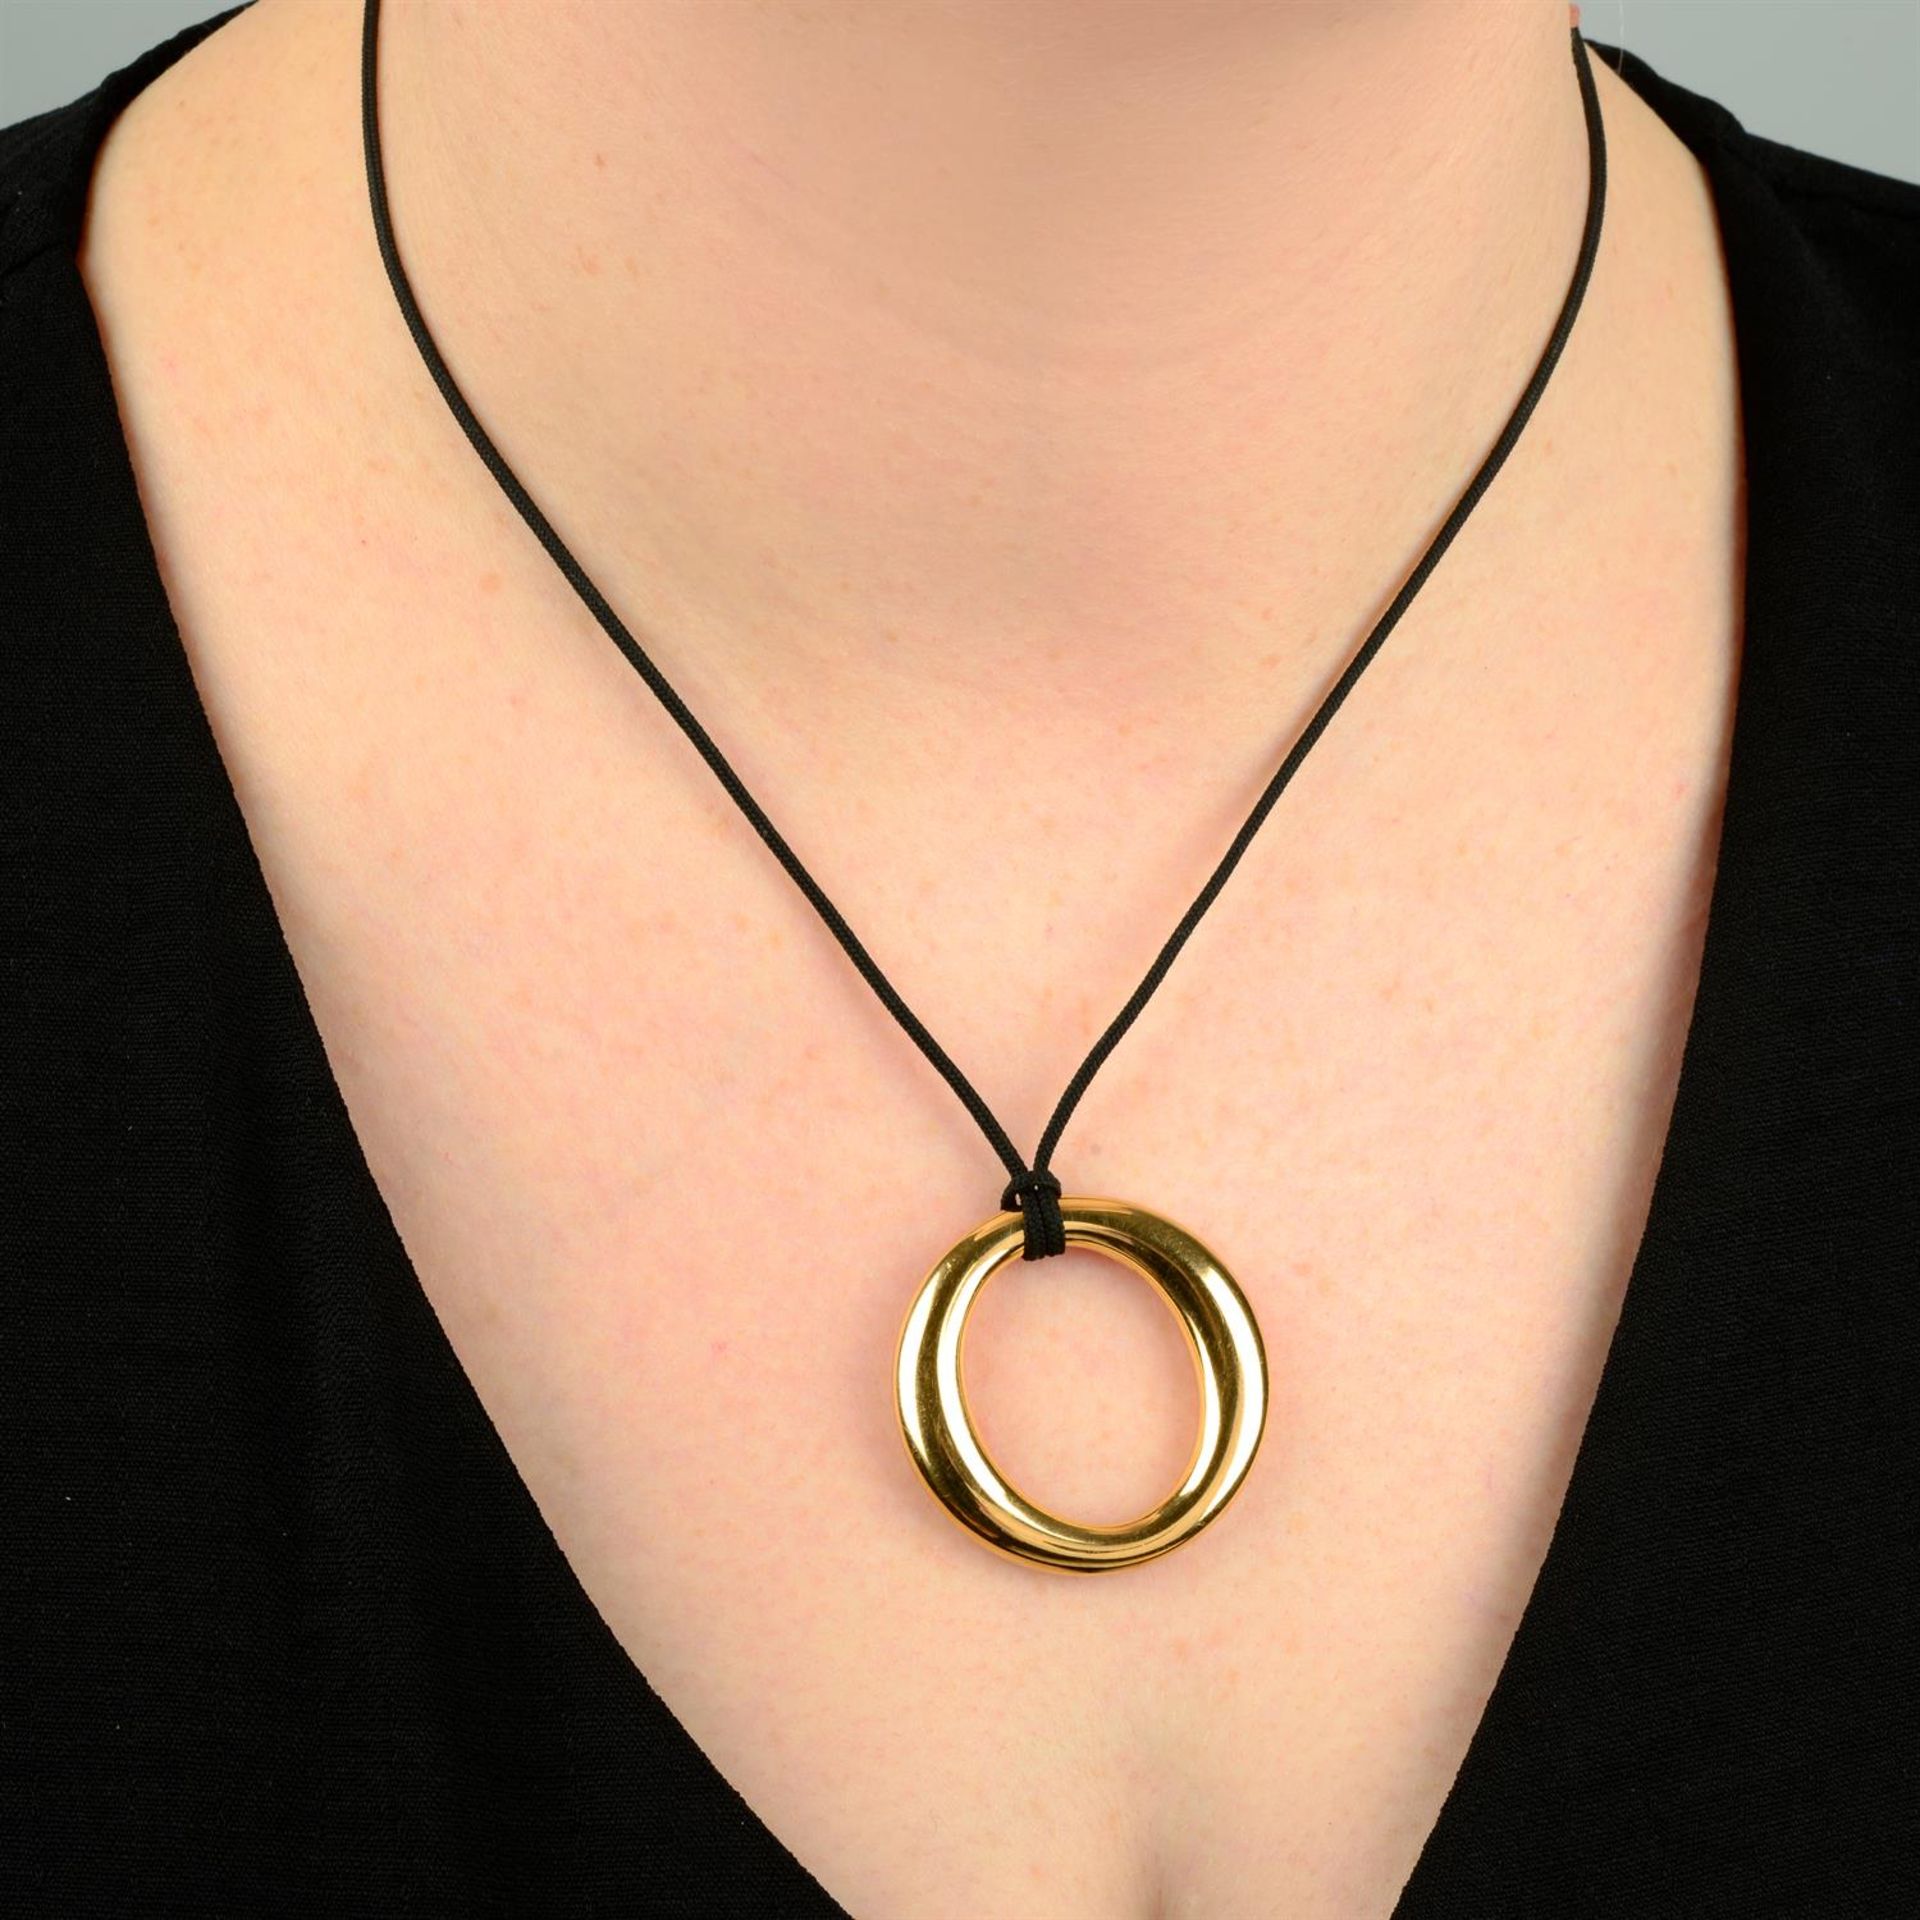 A 'Sevillana' pendant, on black cord, by Elsa Peretti for Tiffany & Co. - Image 6 of 6